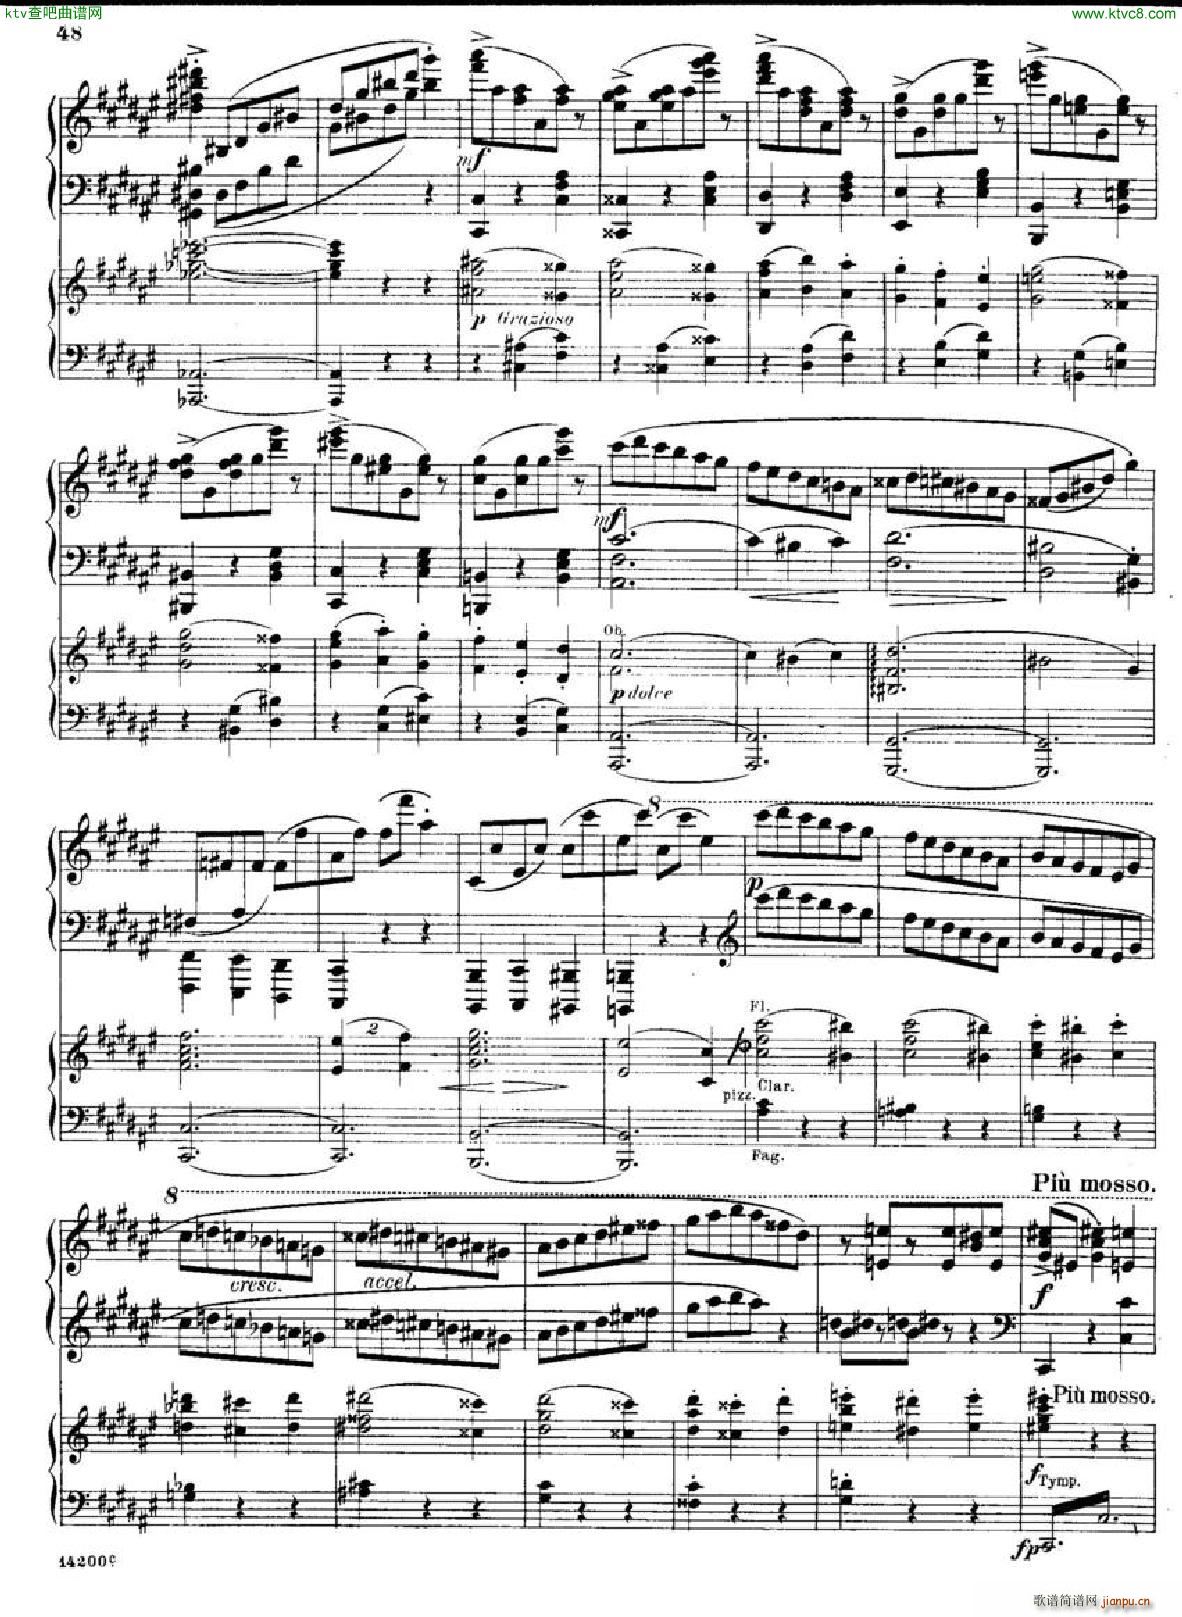 huss concerto part3()14